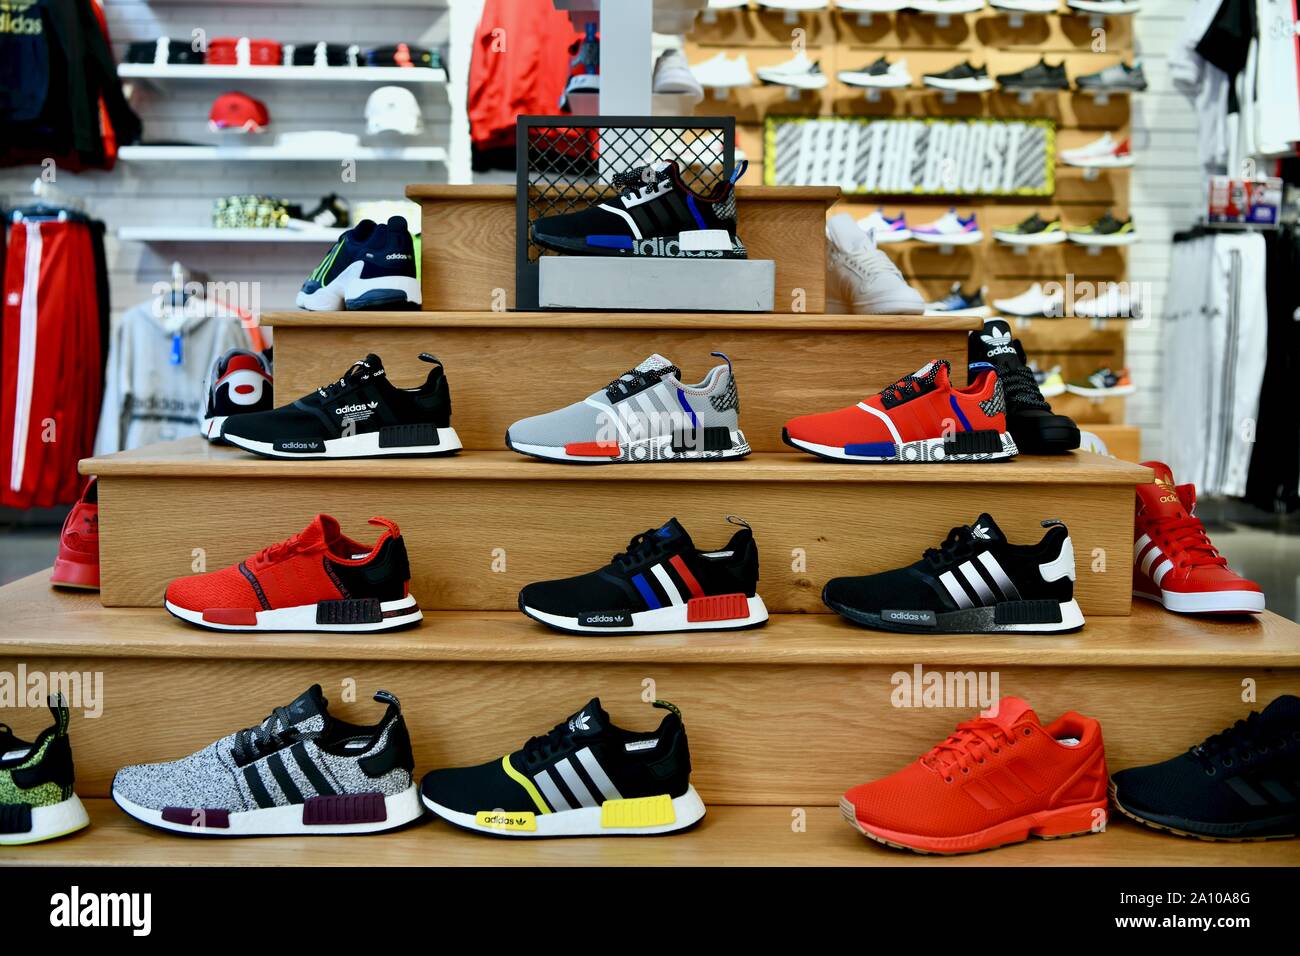 Adidas Schuhe in das Flaggschiff Adidas Store in New York City, USA  Stockfotografie - Alamy